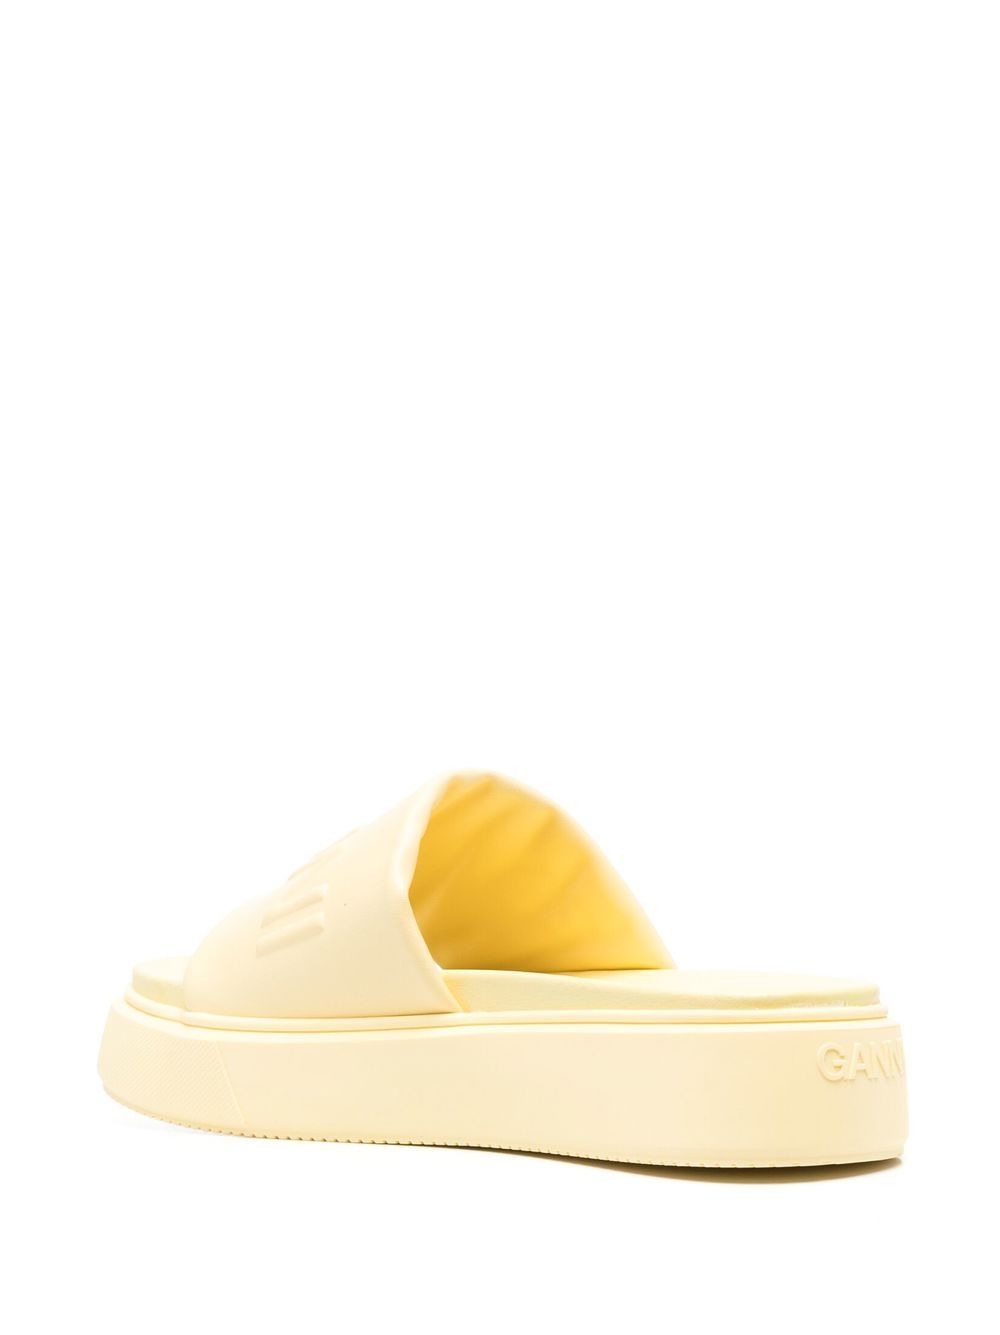 GANNI Sandals Yellow